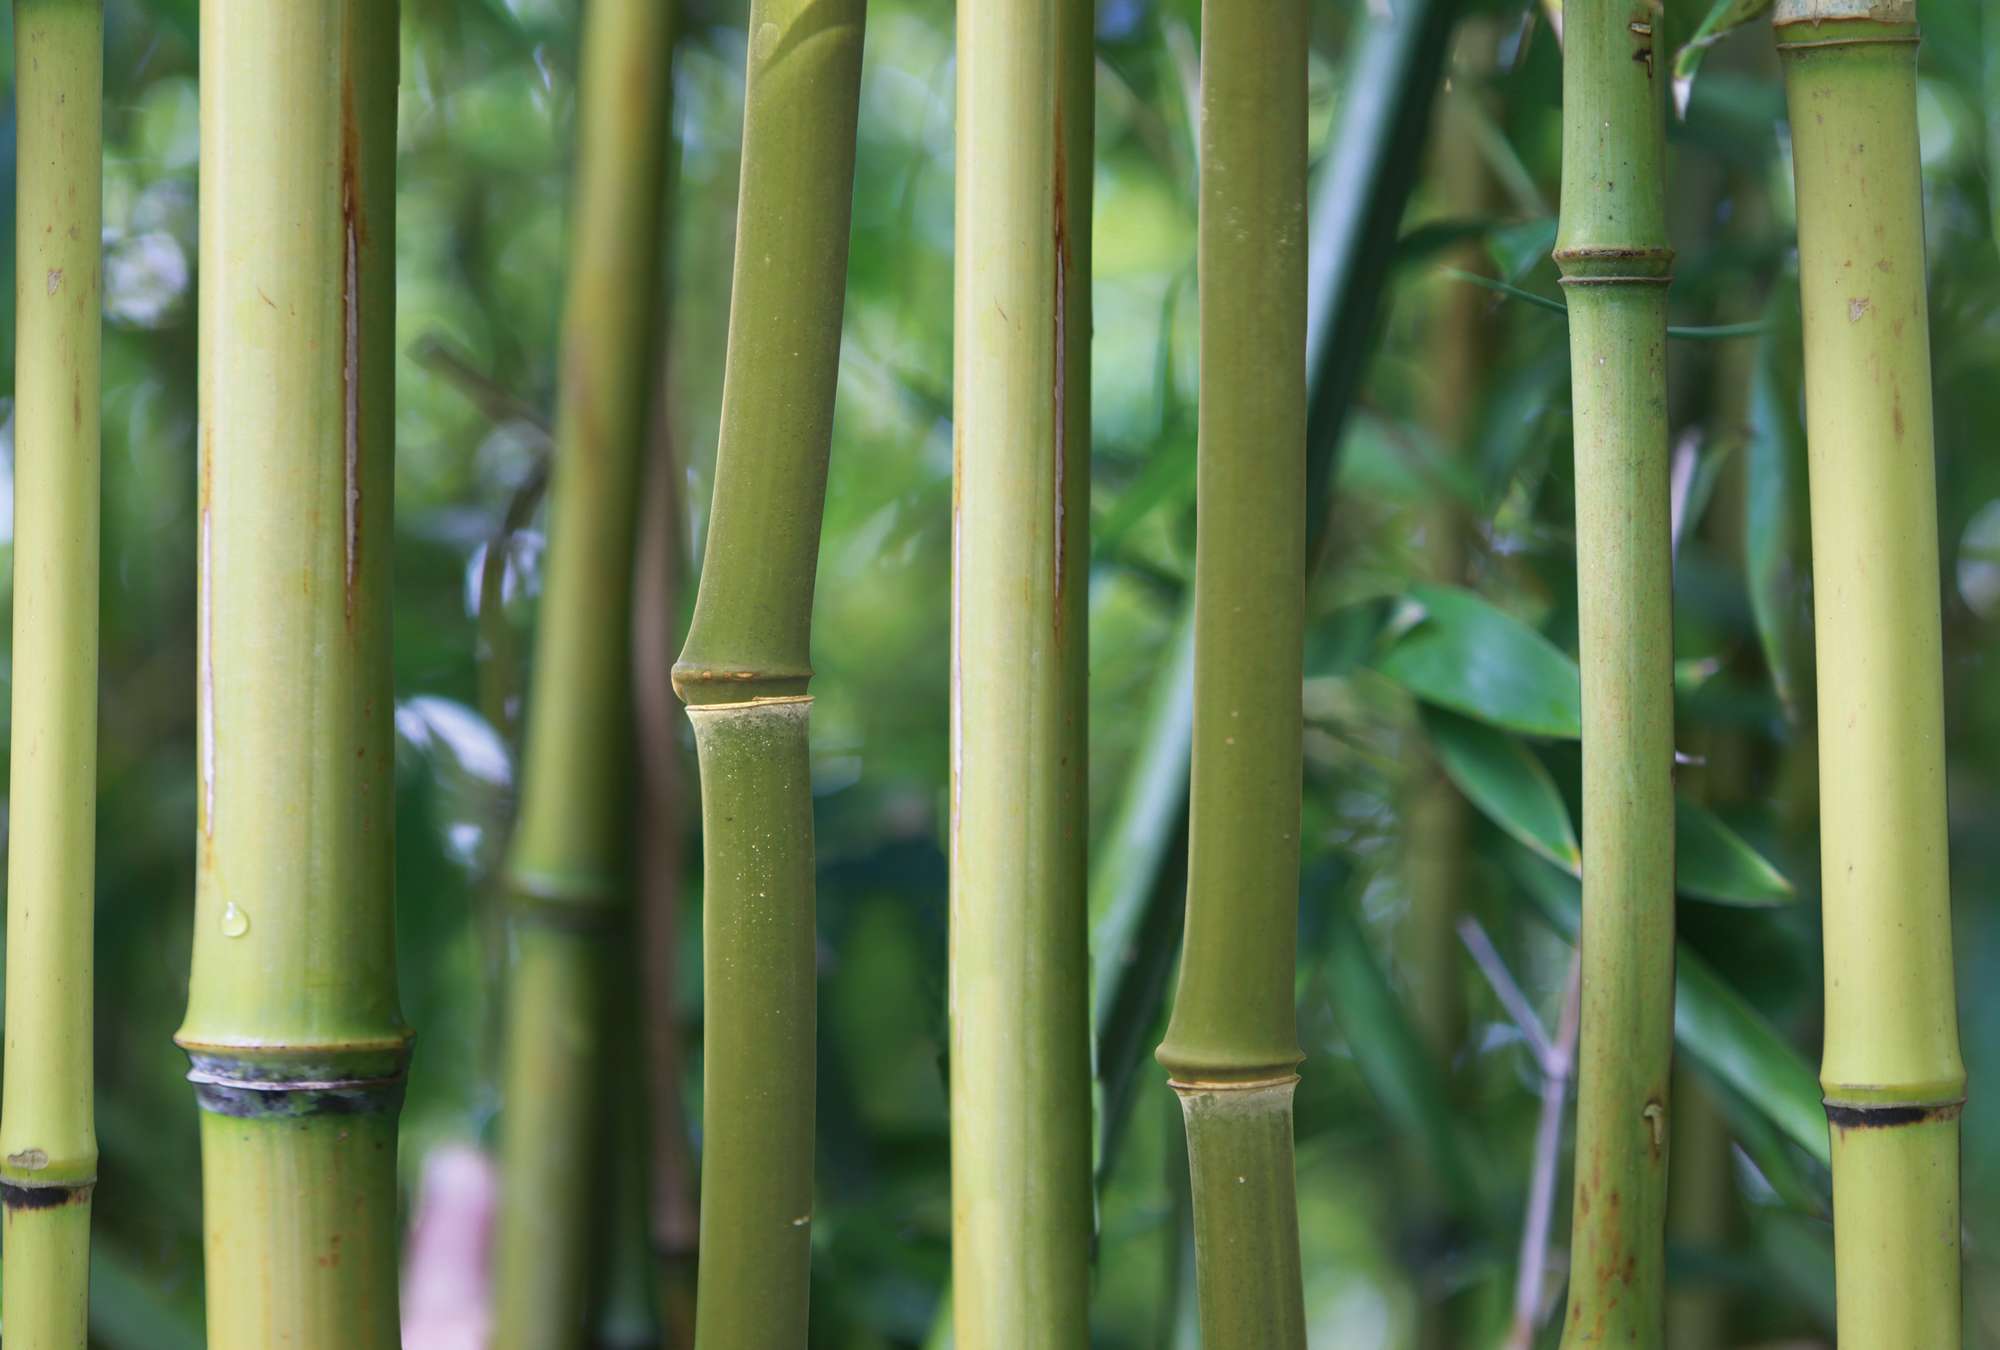             Carta da parati Bambù Foresta di bambù con vista dettagliata
        